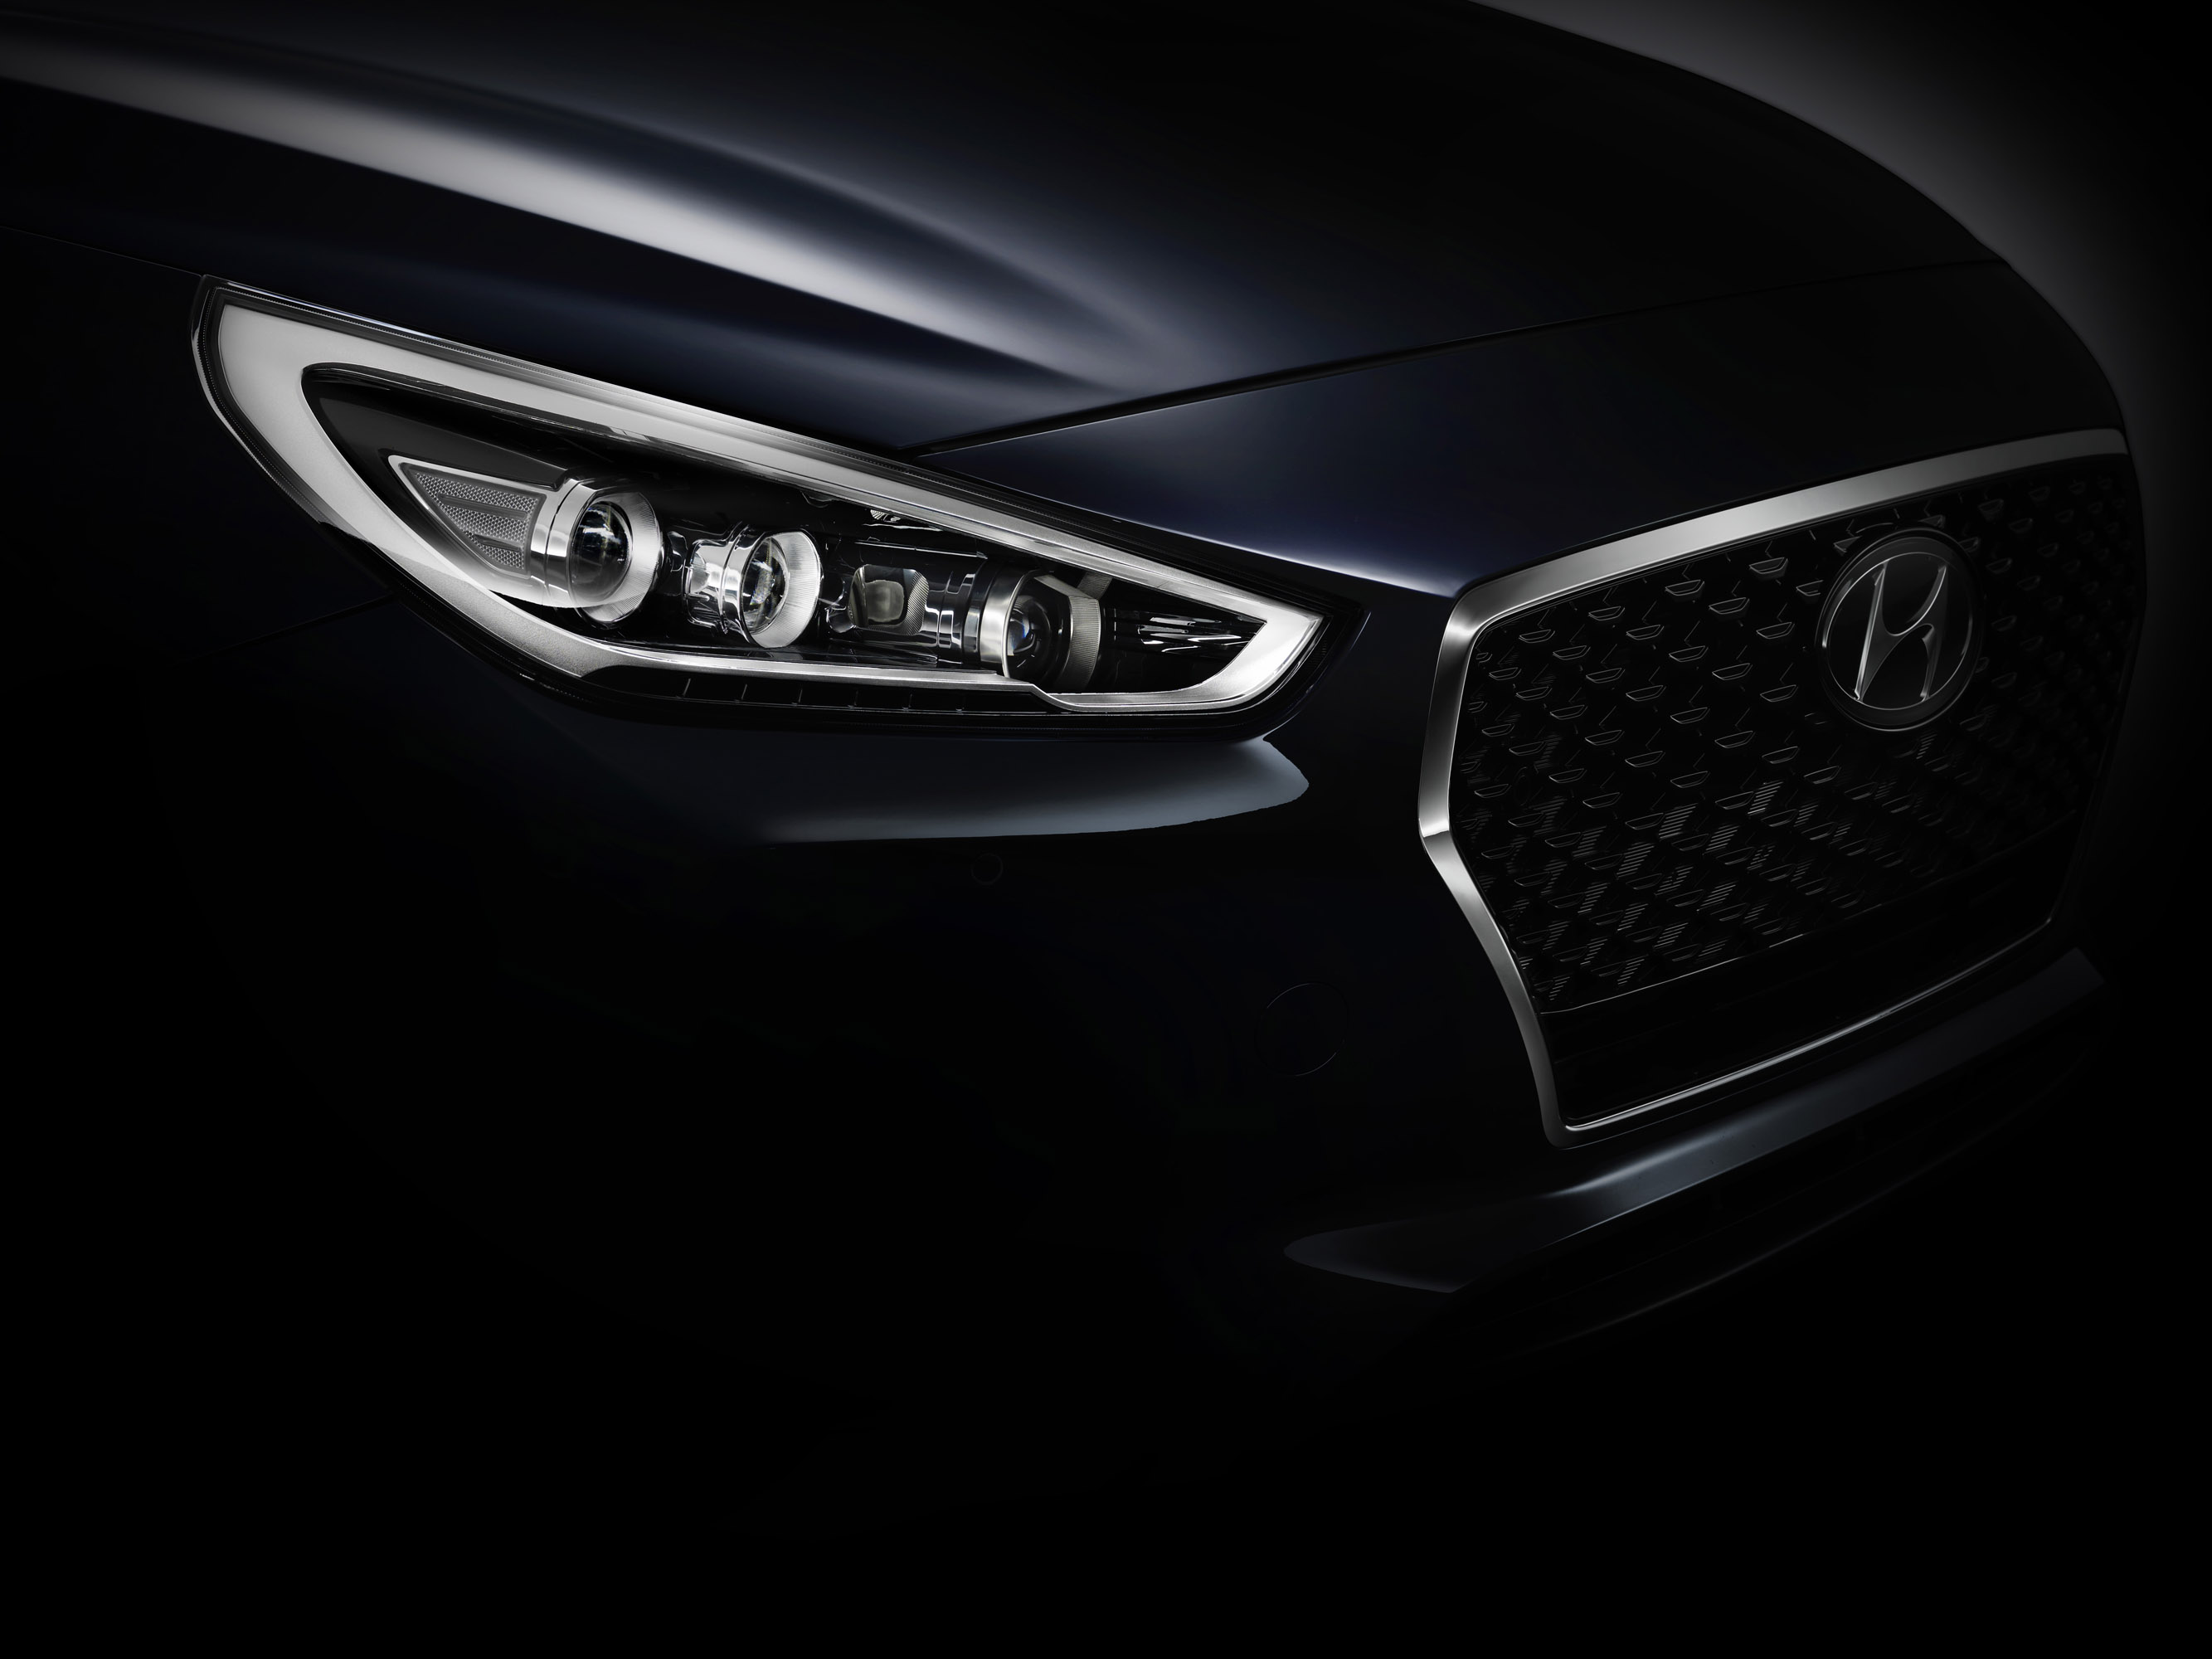 Hyundai i30 Teaser Images